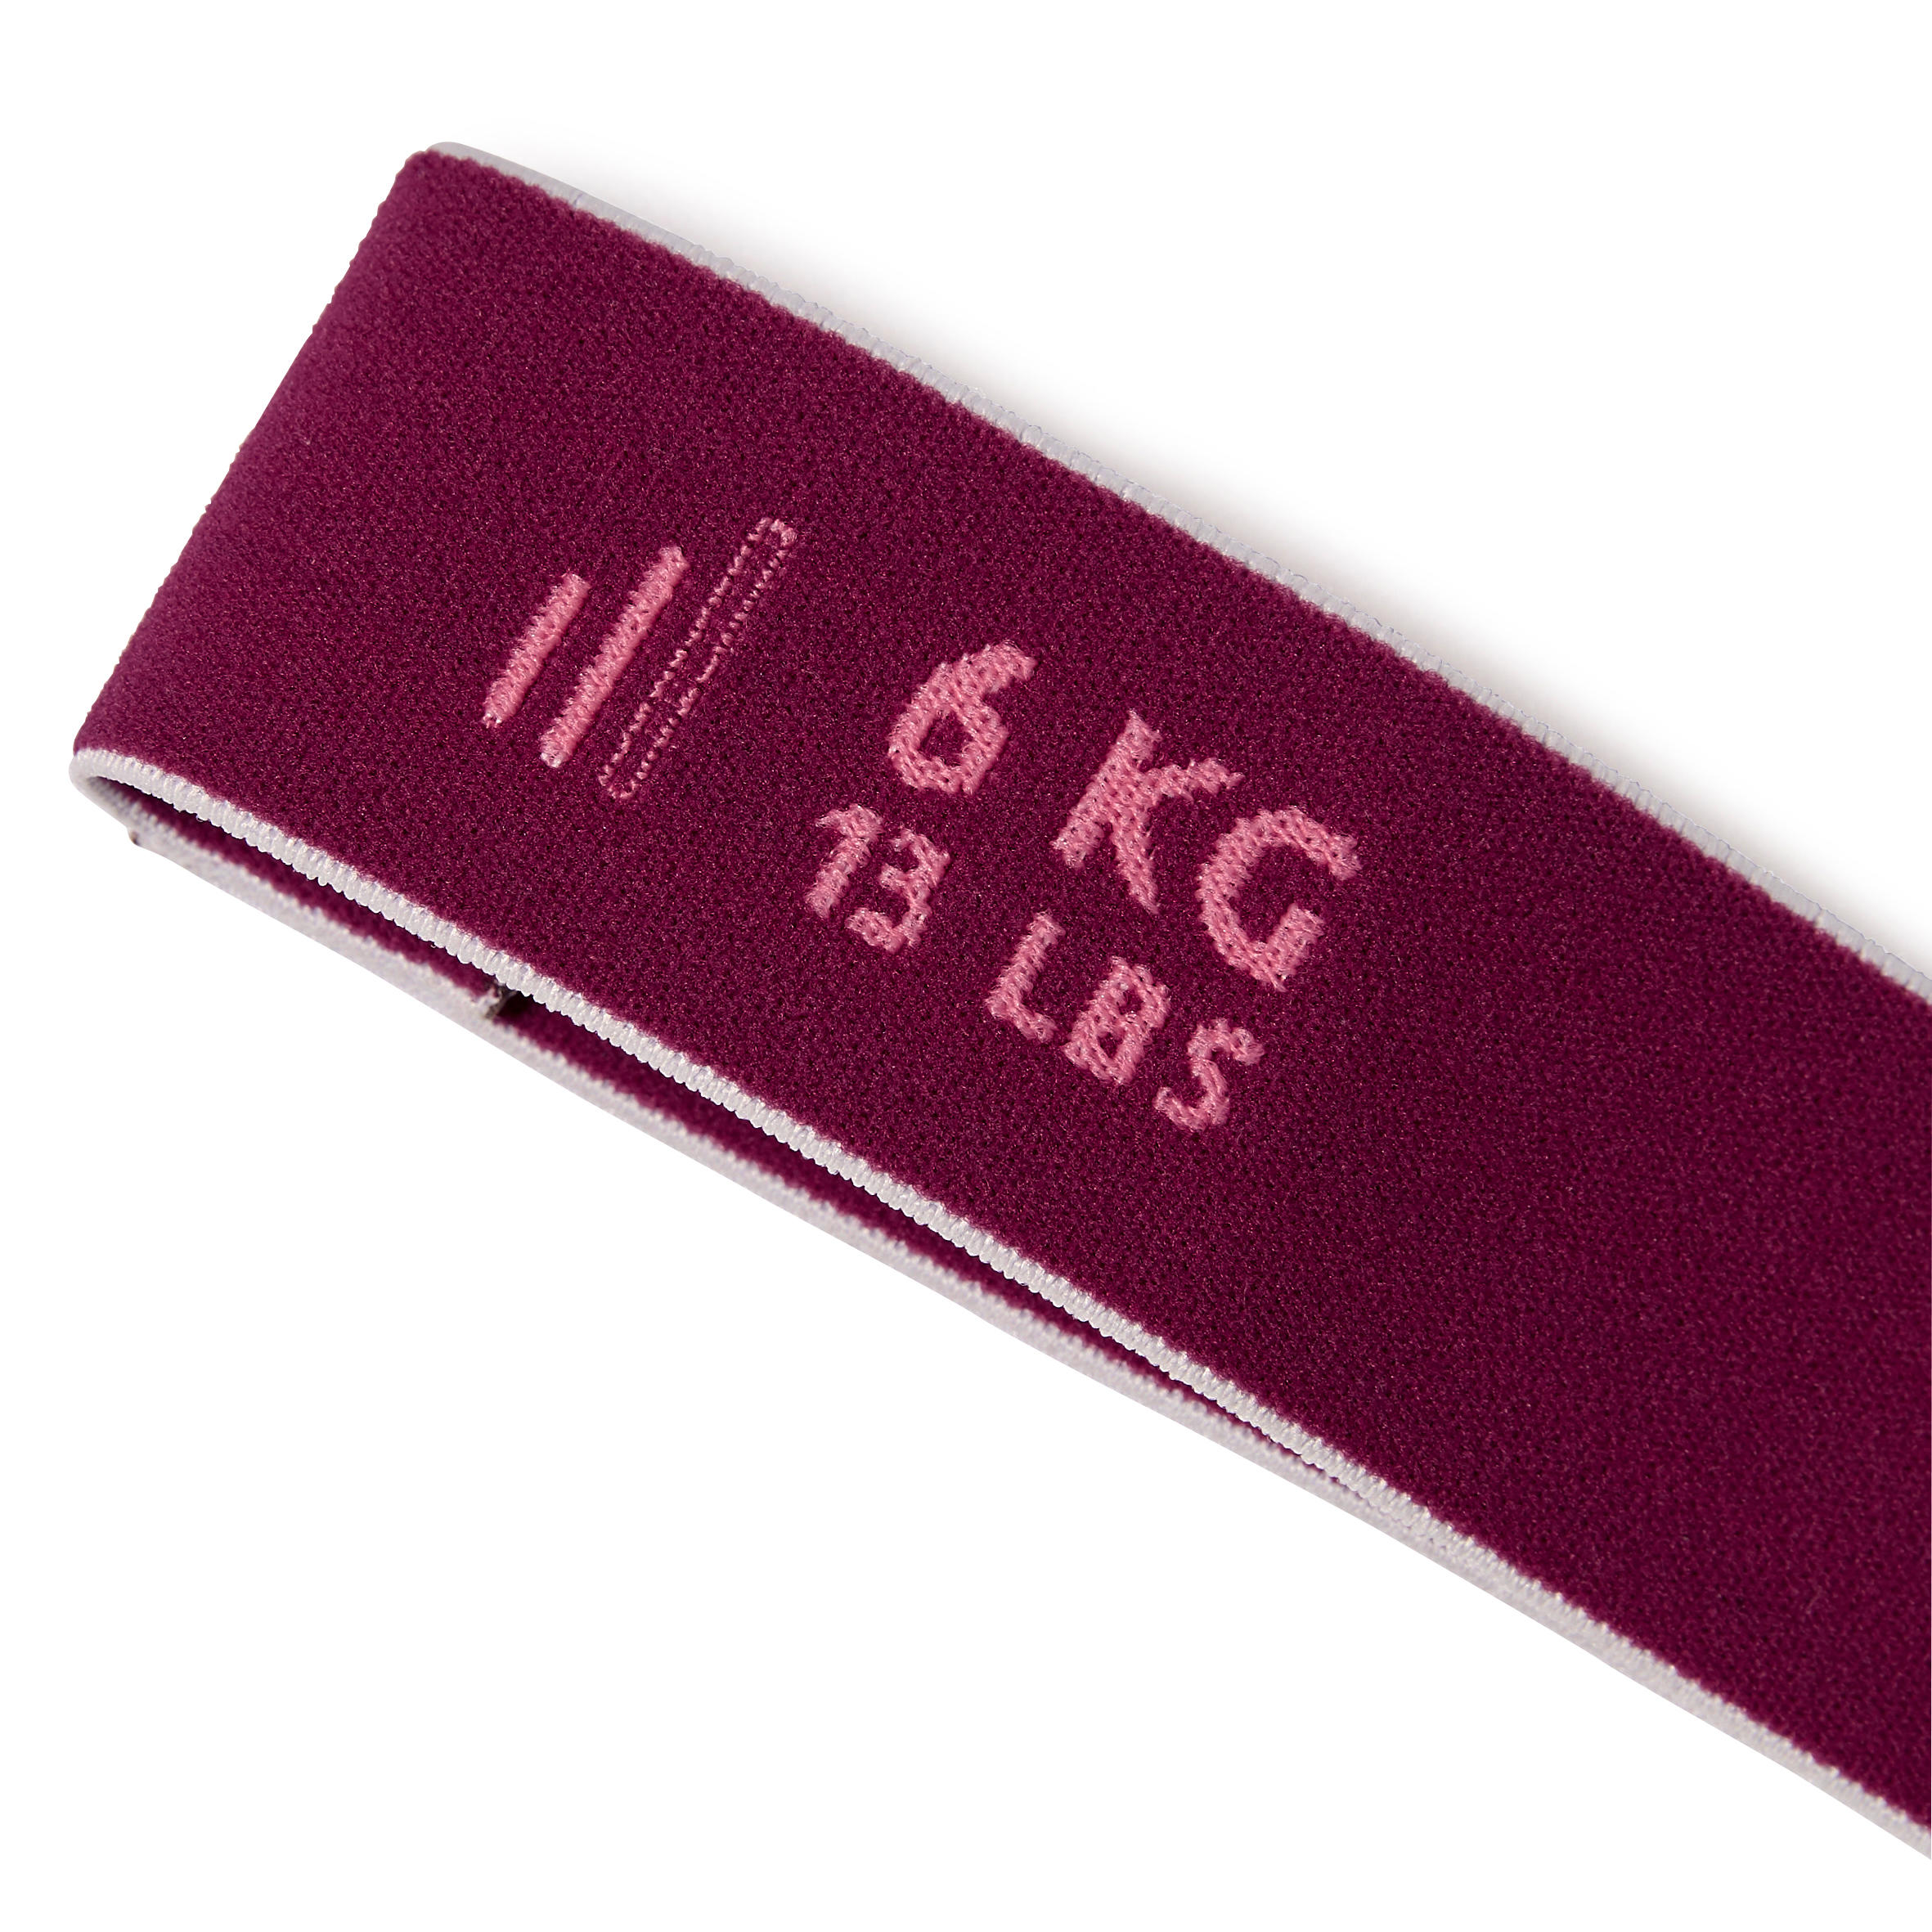 Fitness 6 kg Fabric Mini Resistance Band - Burgundy 3/4